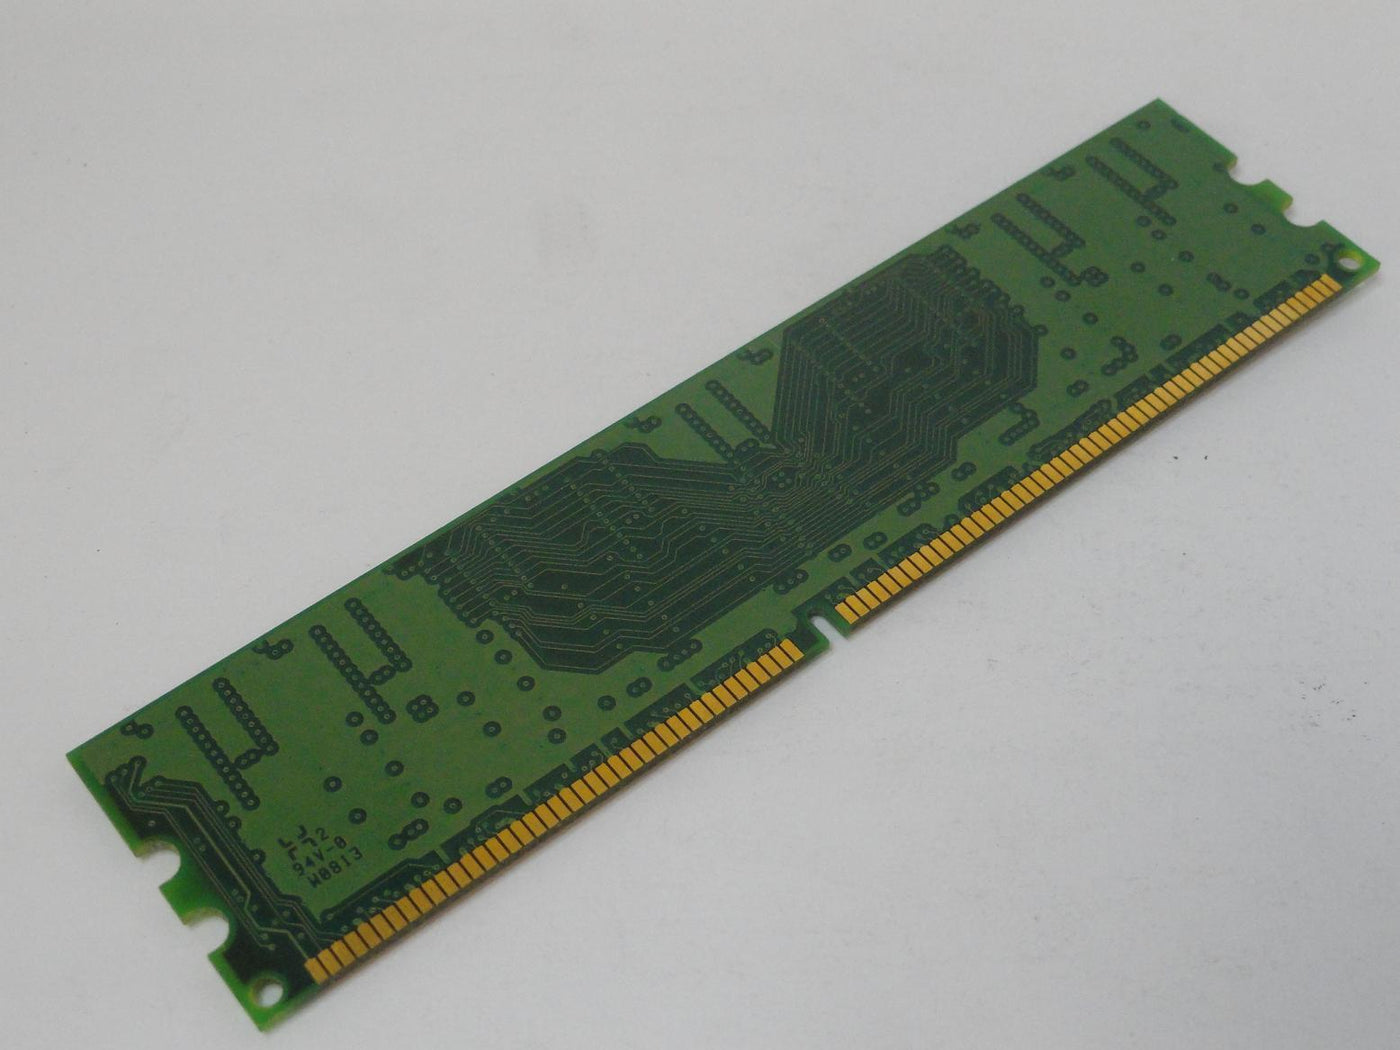 PR25362_9905192-091.A00LF_Kingston 512MB PC3200 DDR-400MHz DIMM RAM - Image2